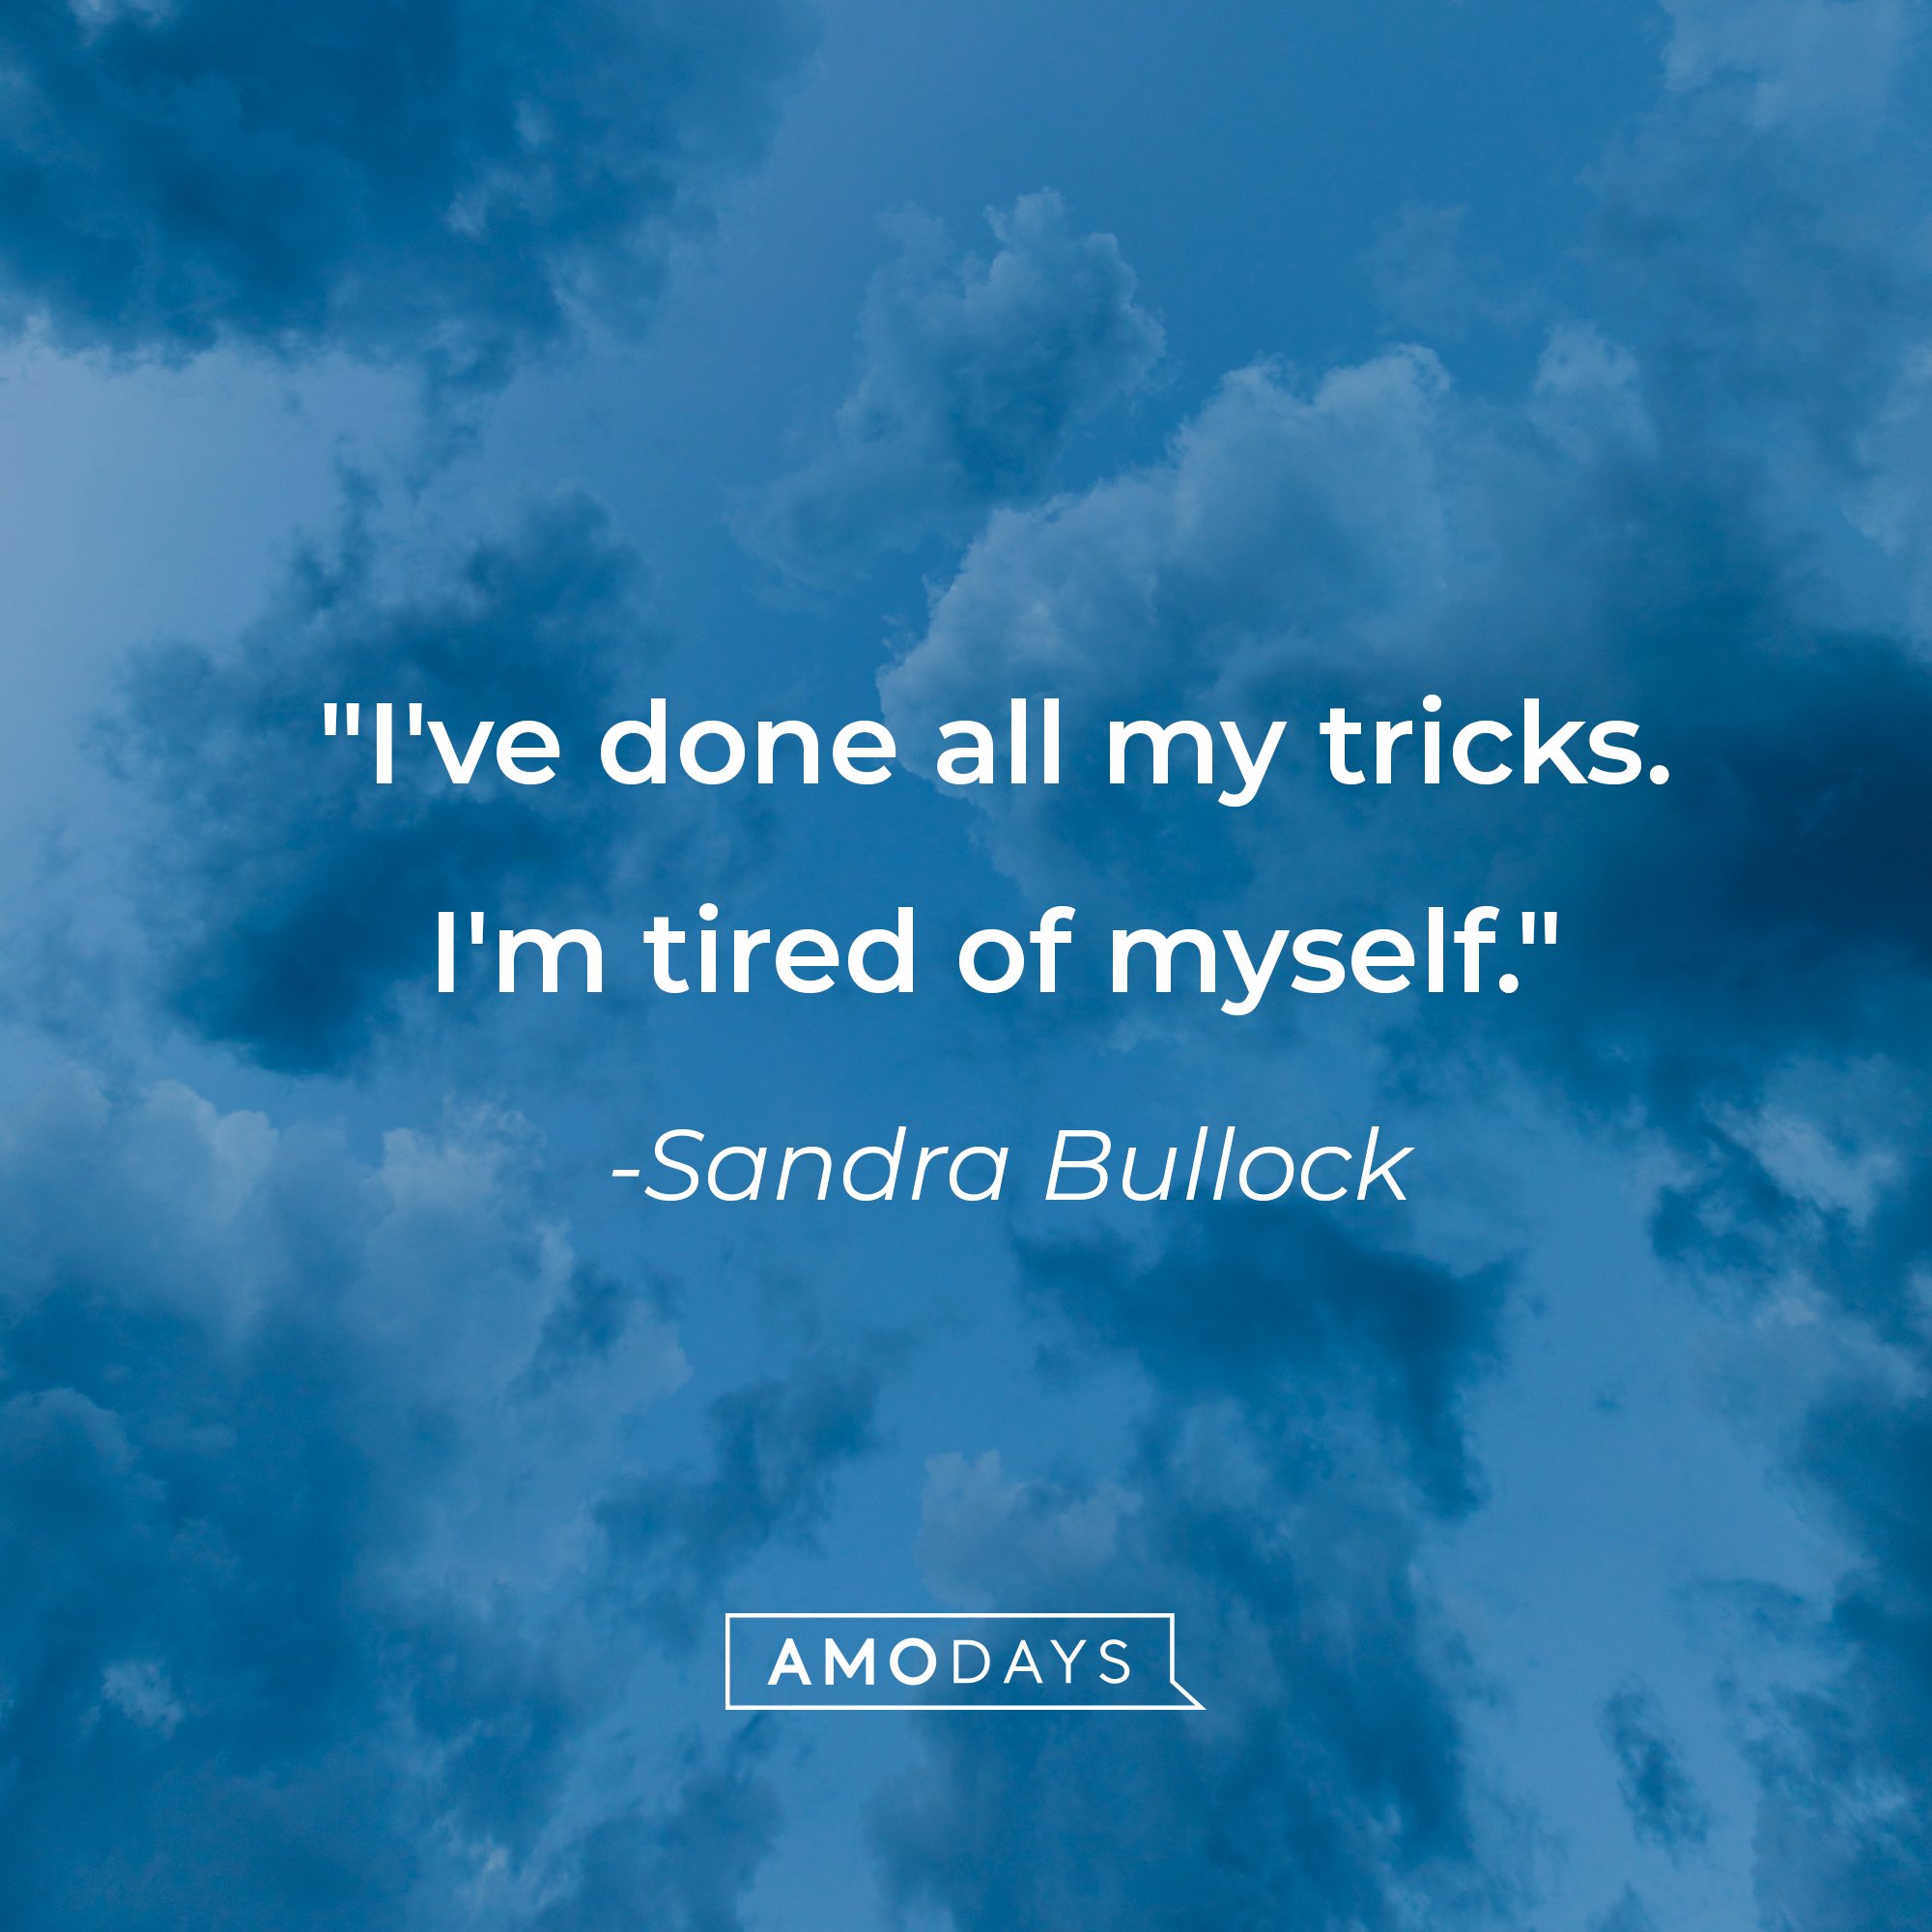 Sandra Bullock's quote: "I've done all my tricks. I'm tired of myself." | Source: AmoDays